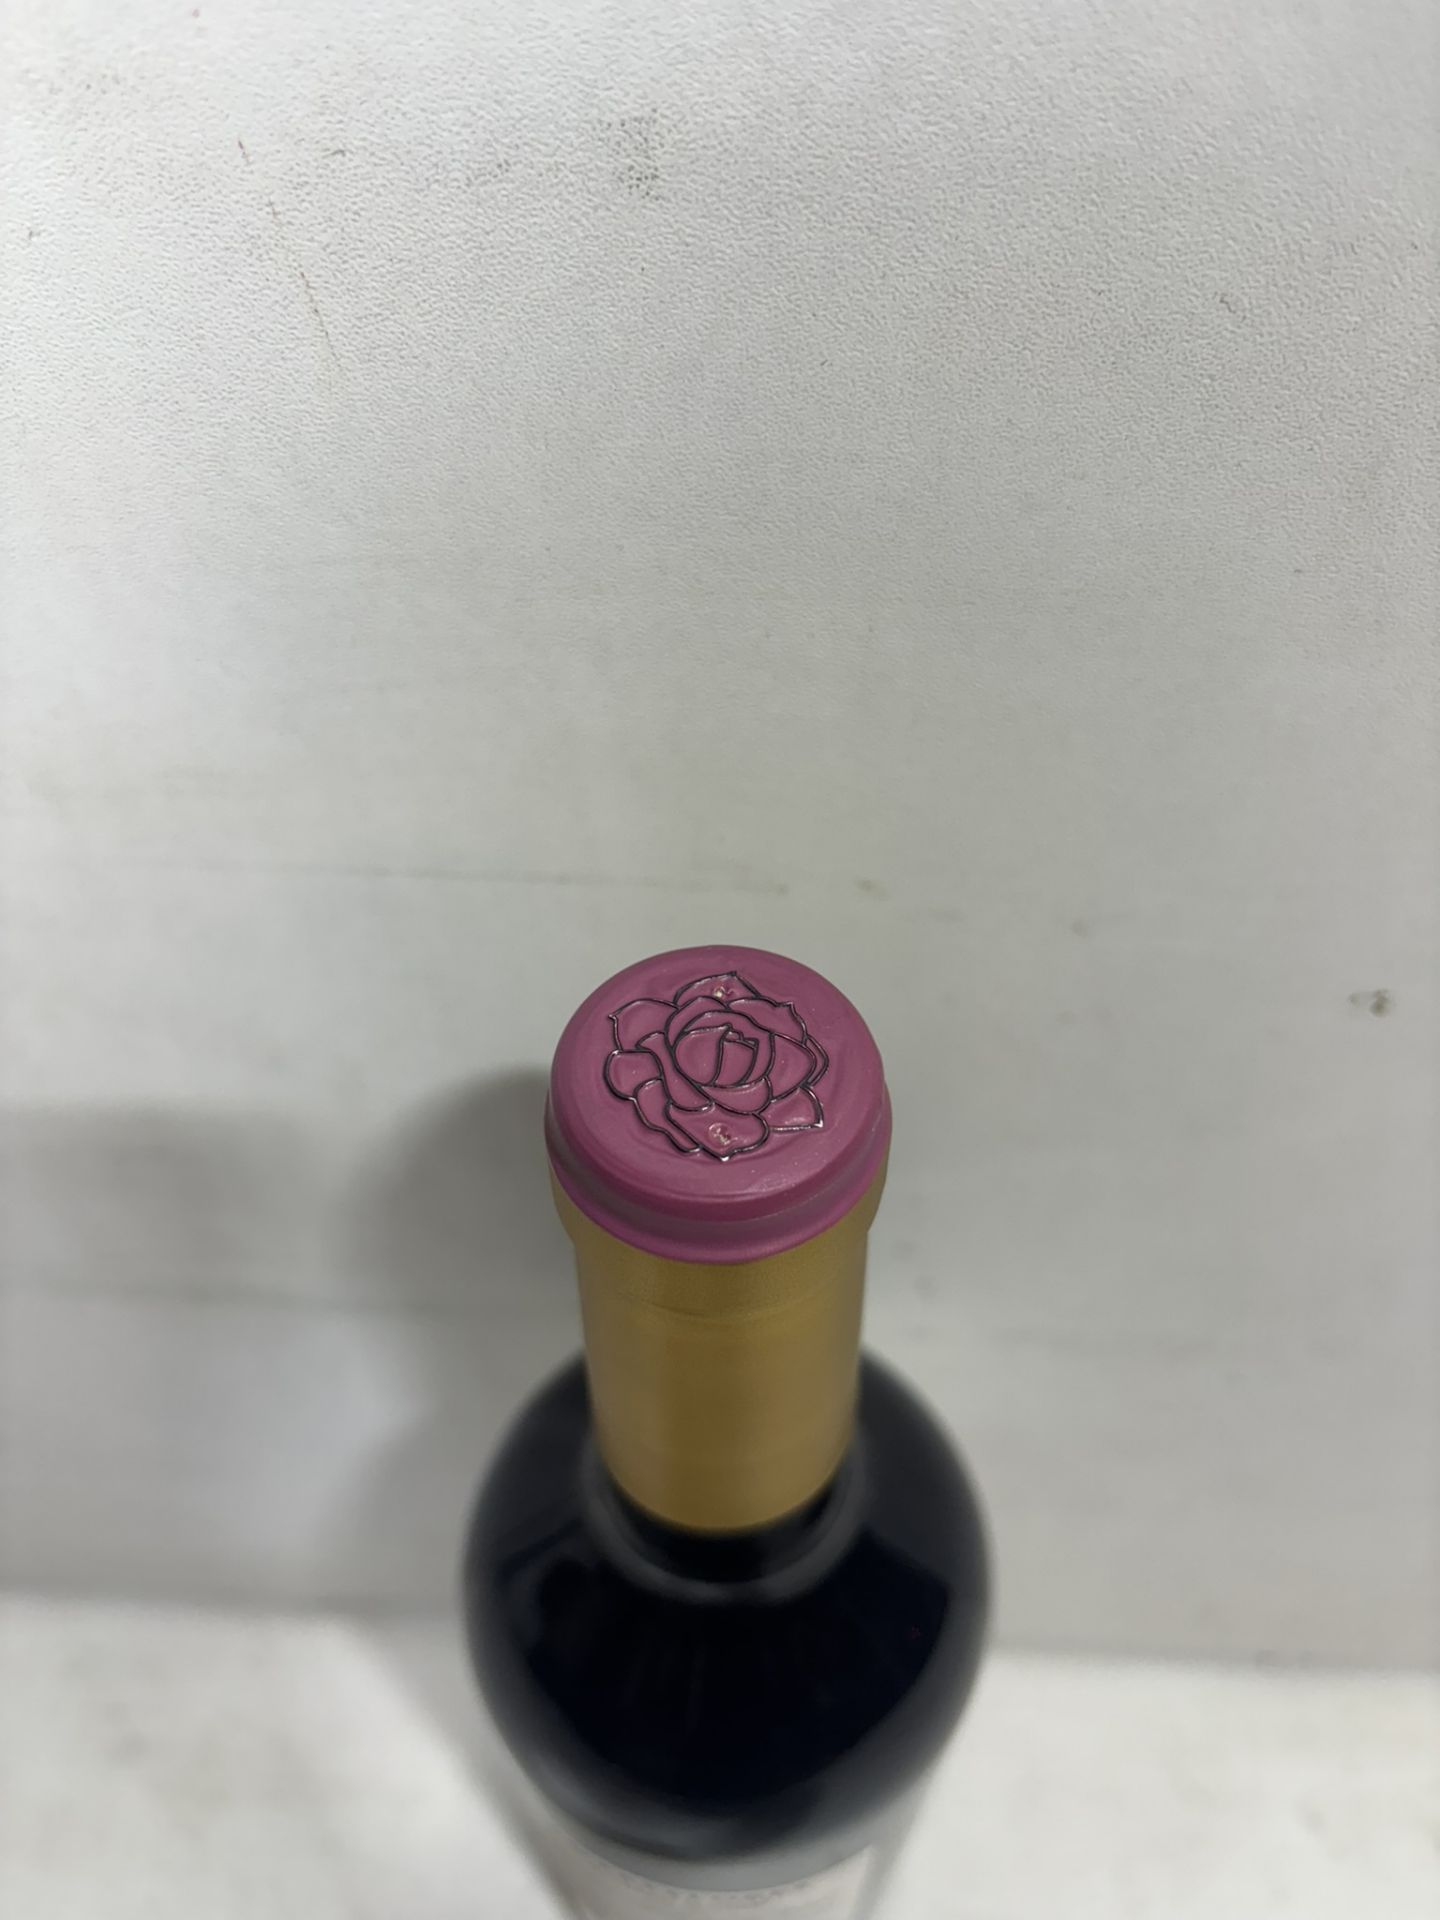 12 X Bottles Of Entreflores Rioja Crianza 2018 75Cl Tempranillo Intense Red Wine - Image 4 of 6